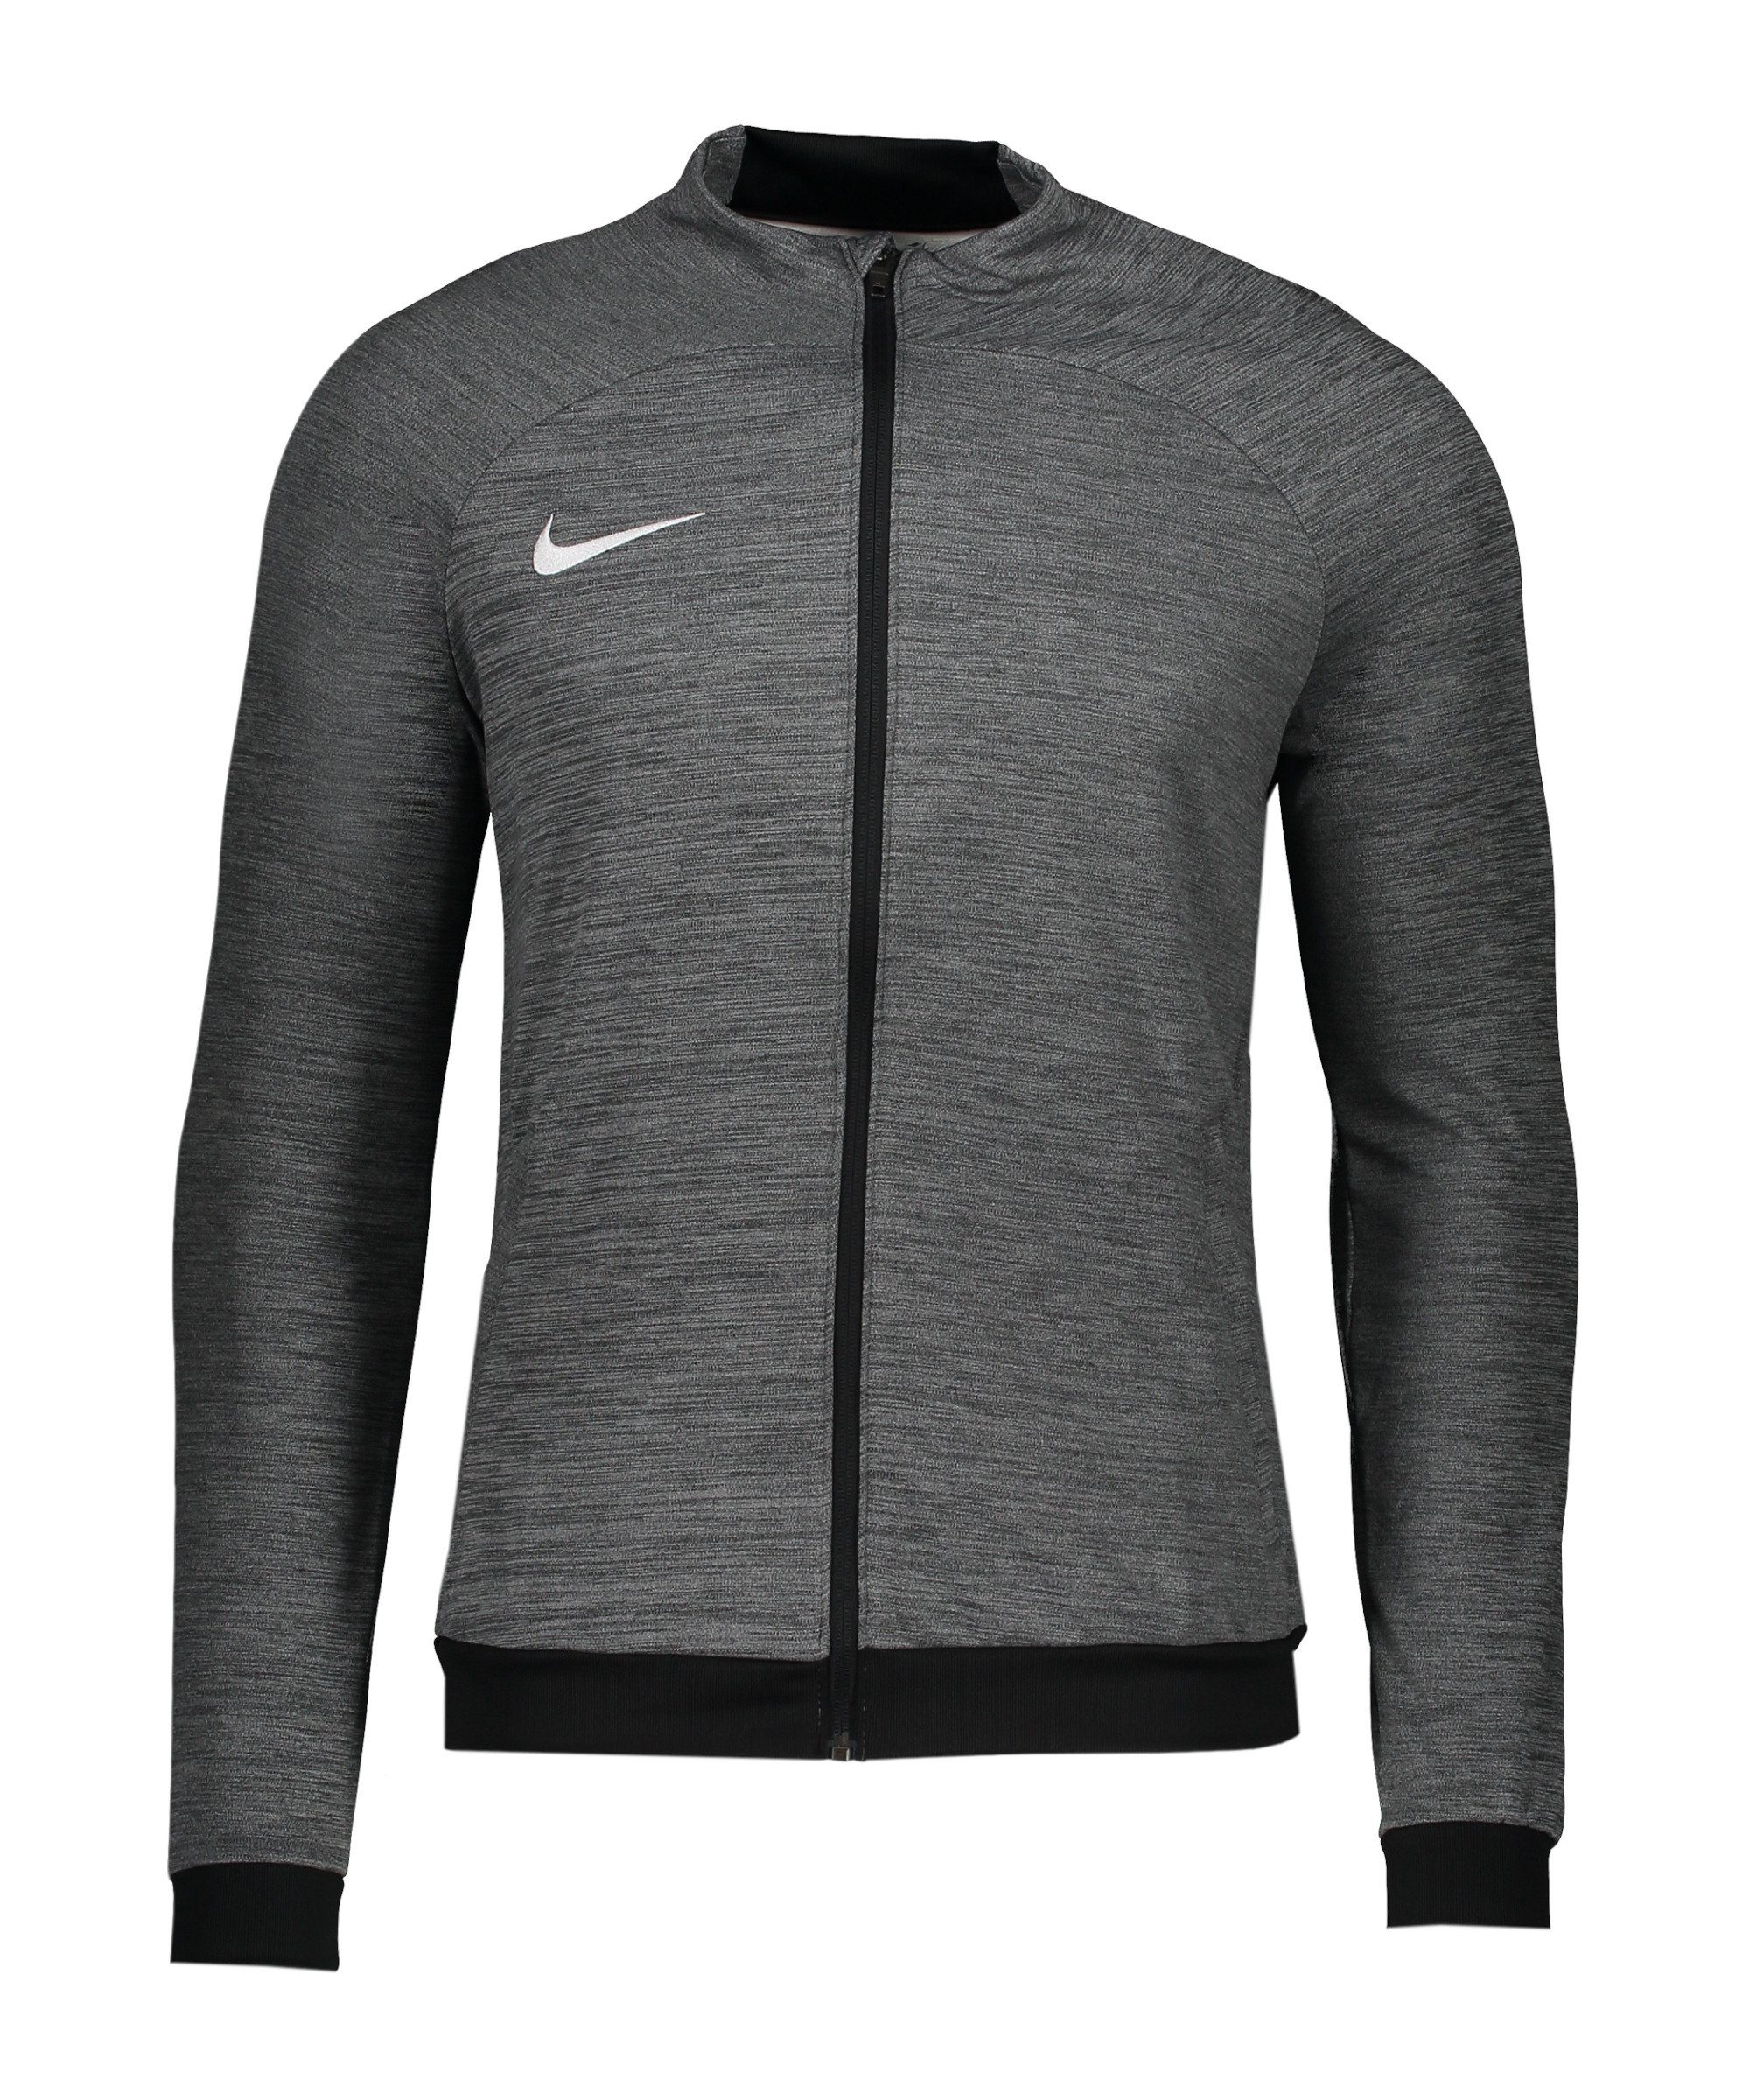 Sweatjacke Academy schwarzschwarzweiss Nike Trainingsjacke